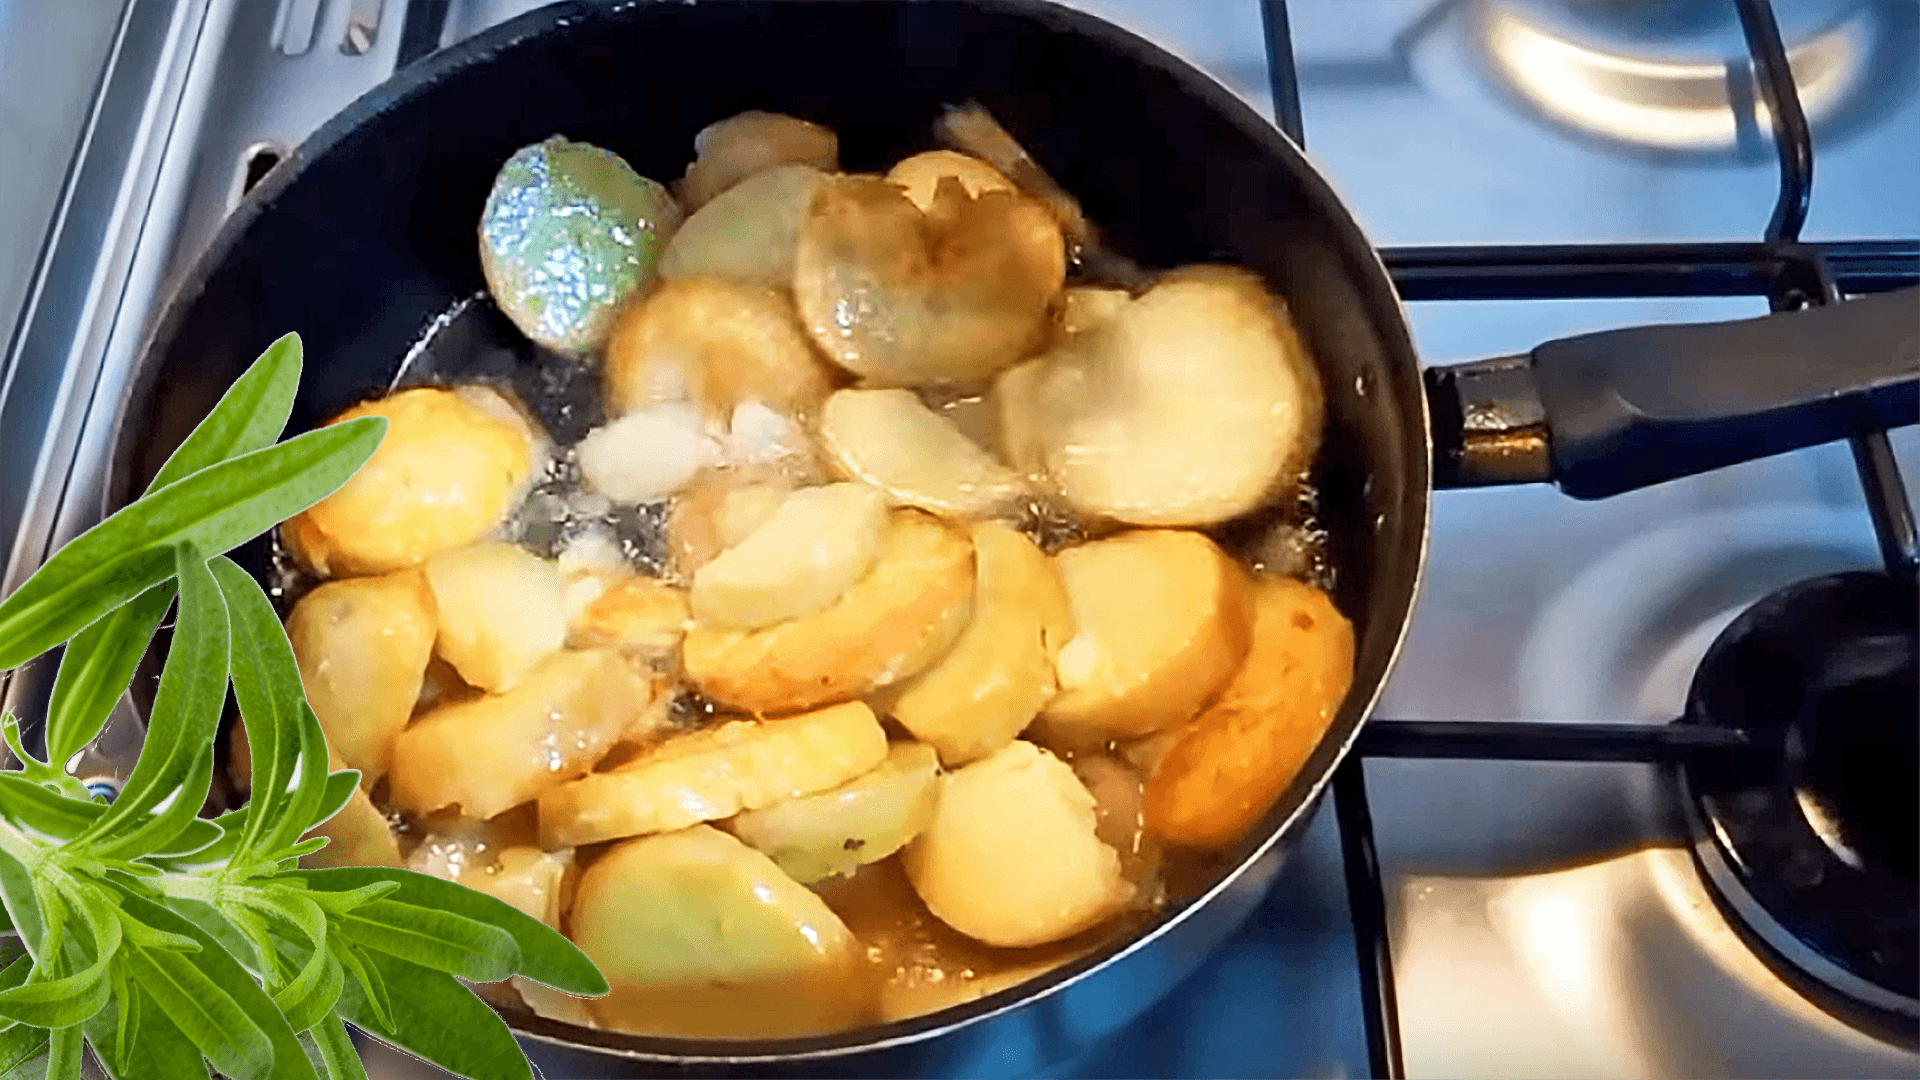 Basic Home Fries Recipe (Tarragon Cottage Fries)